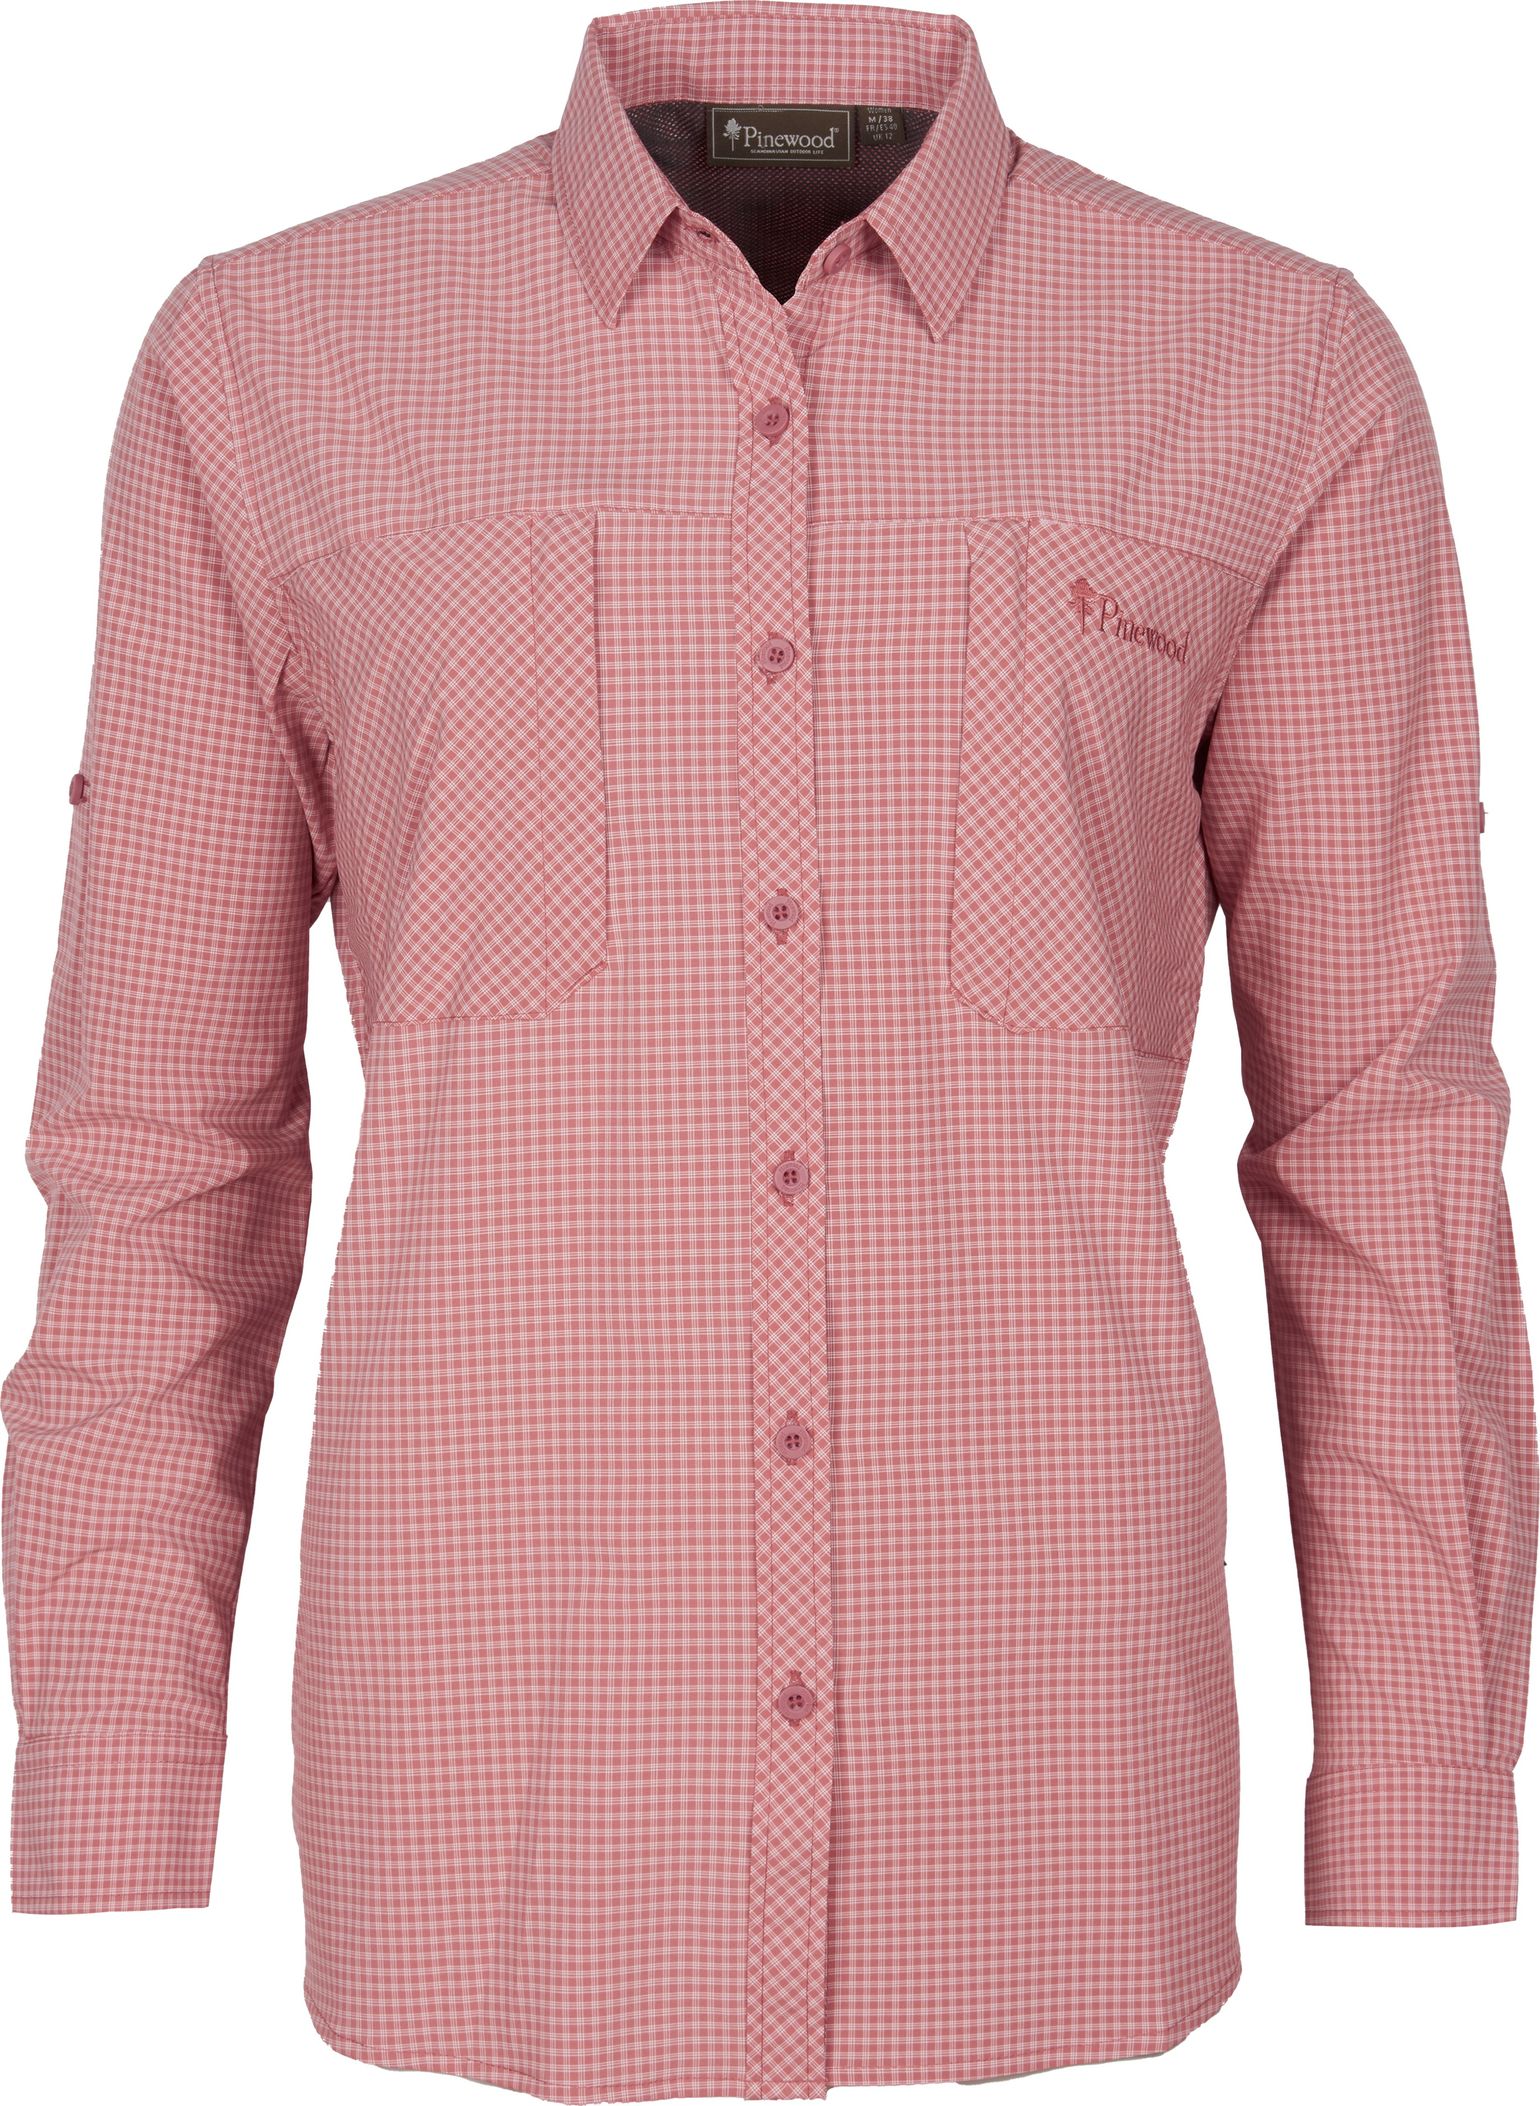 Pinewood Women's InsectSafe Shirt Brick Pink/Offwhite